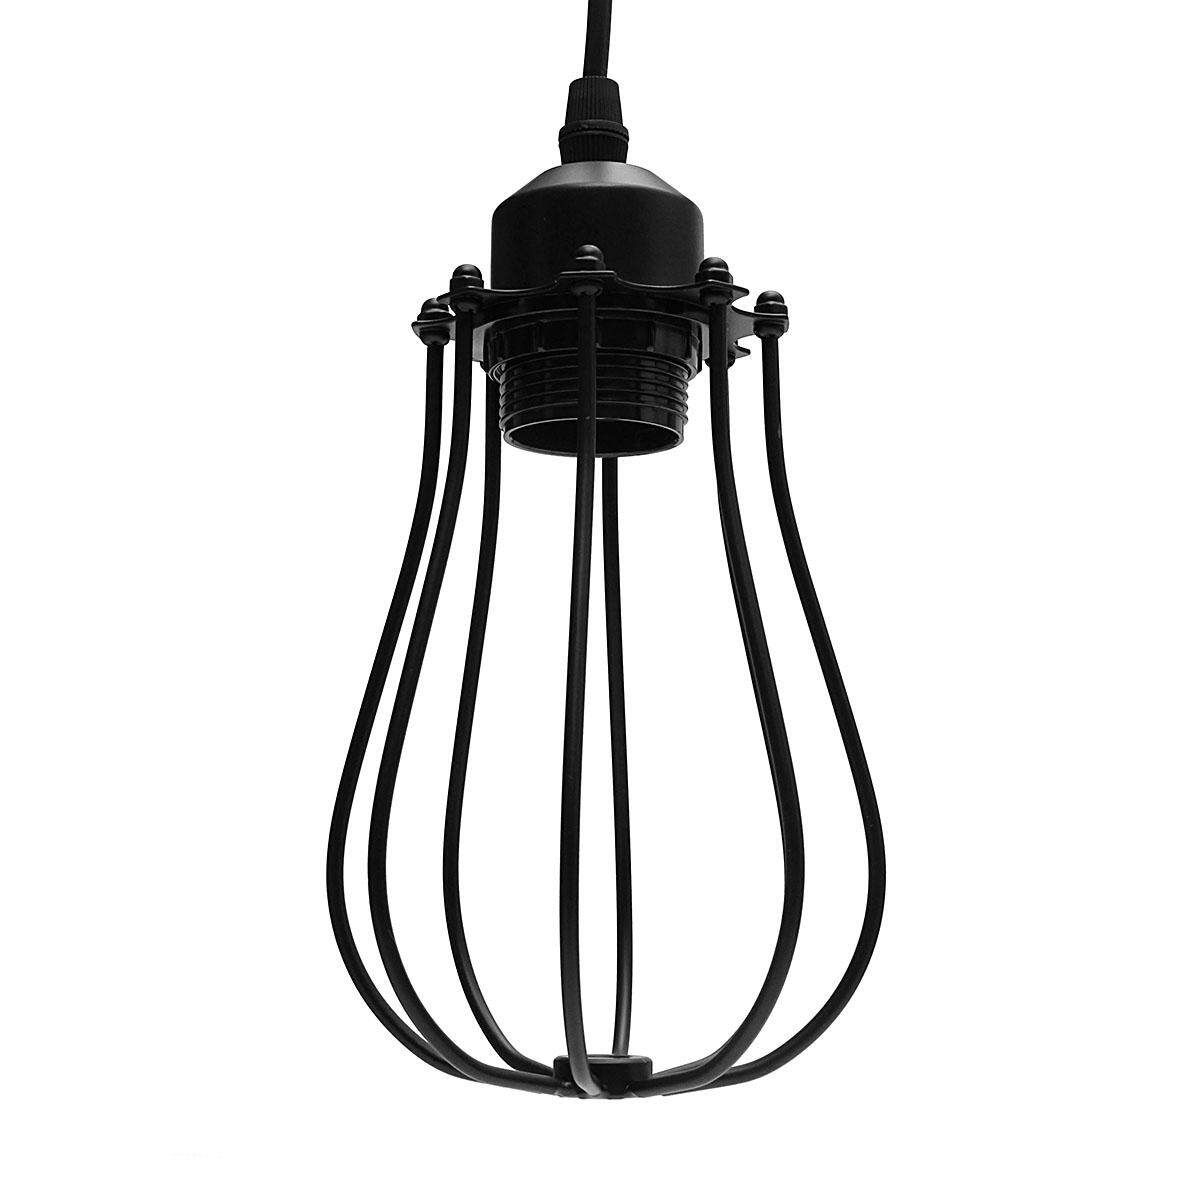 Vintage Light Retro Industrial Metal Shade Ceiling Pendant Lamps Edison Bulb - intl